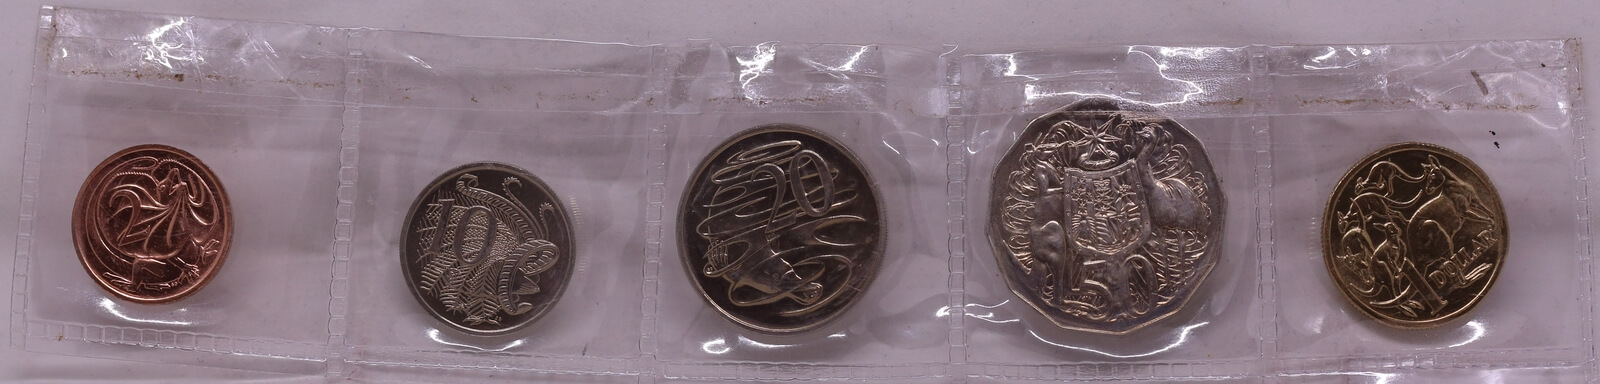 Australia 1987 Set of 5 Uncirculated Coins ex Mint set ($1, 50c, 20c, 10c and 2c) product image